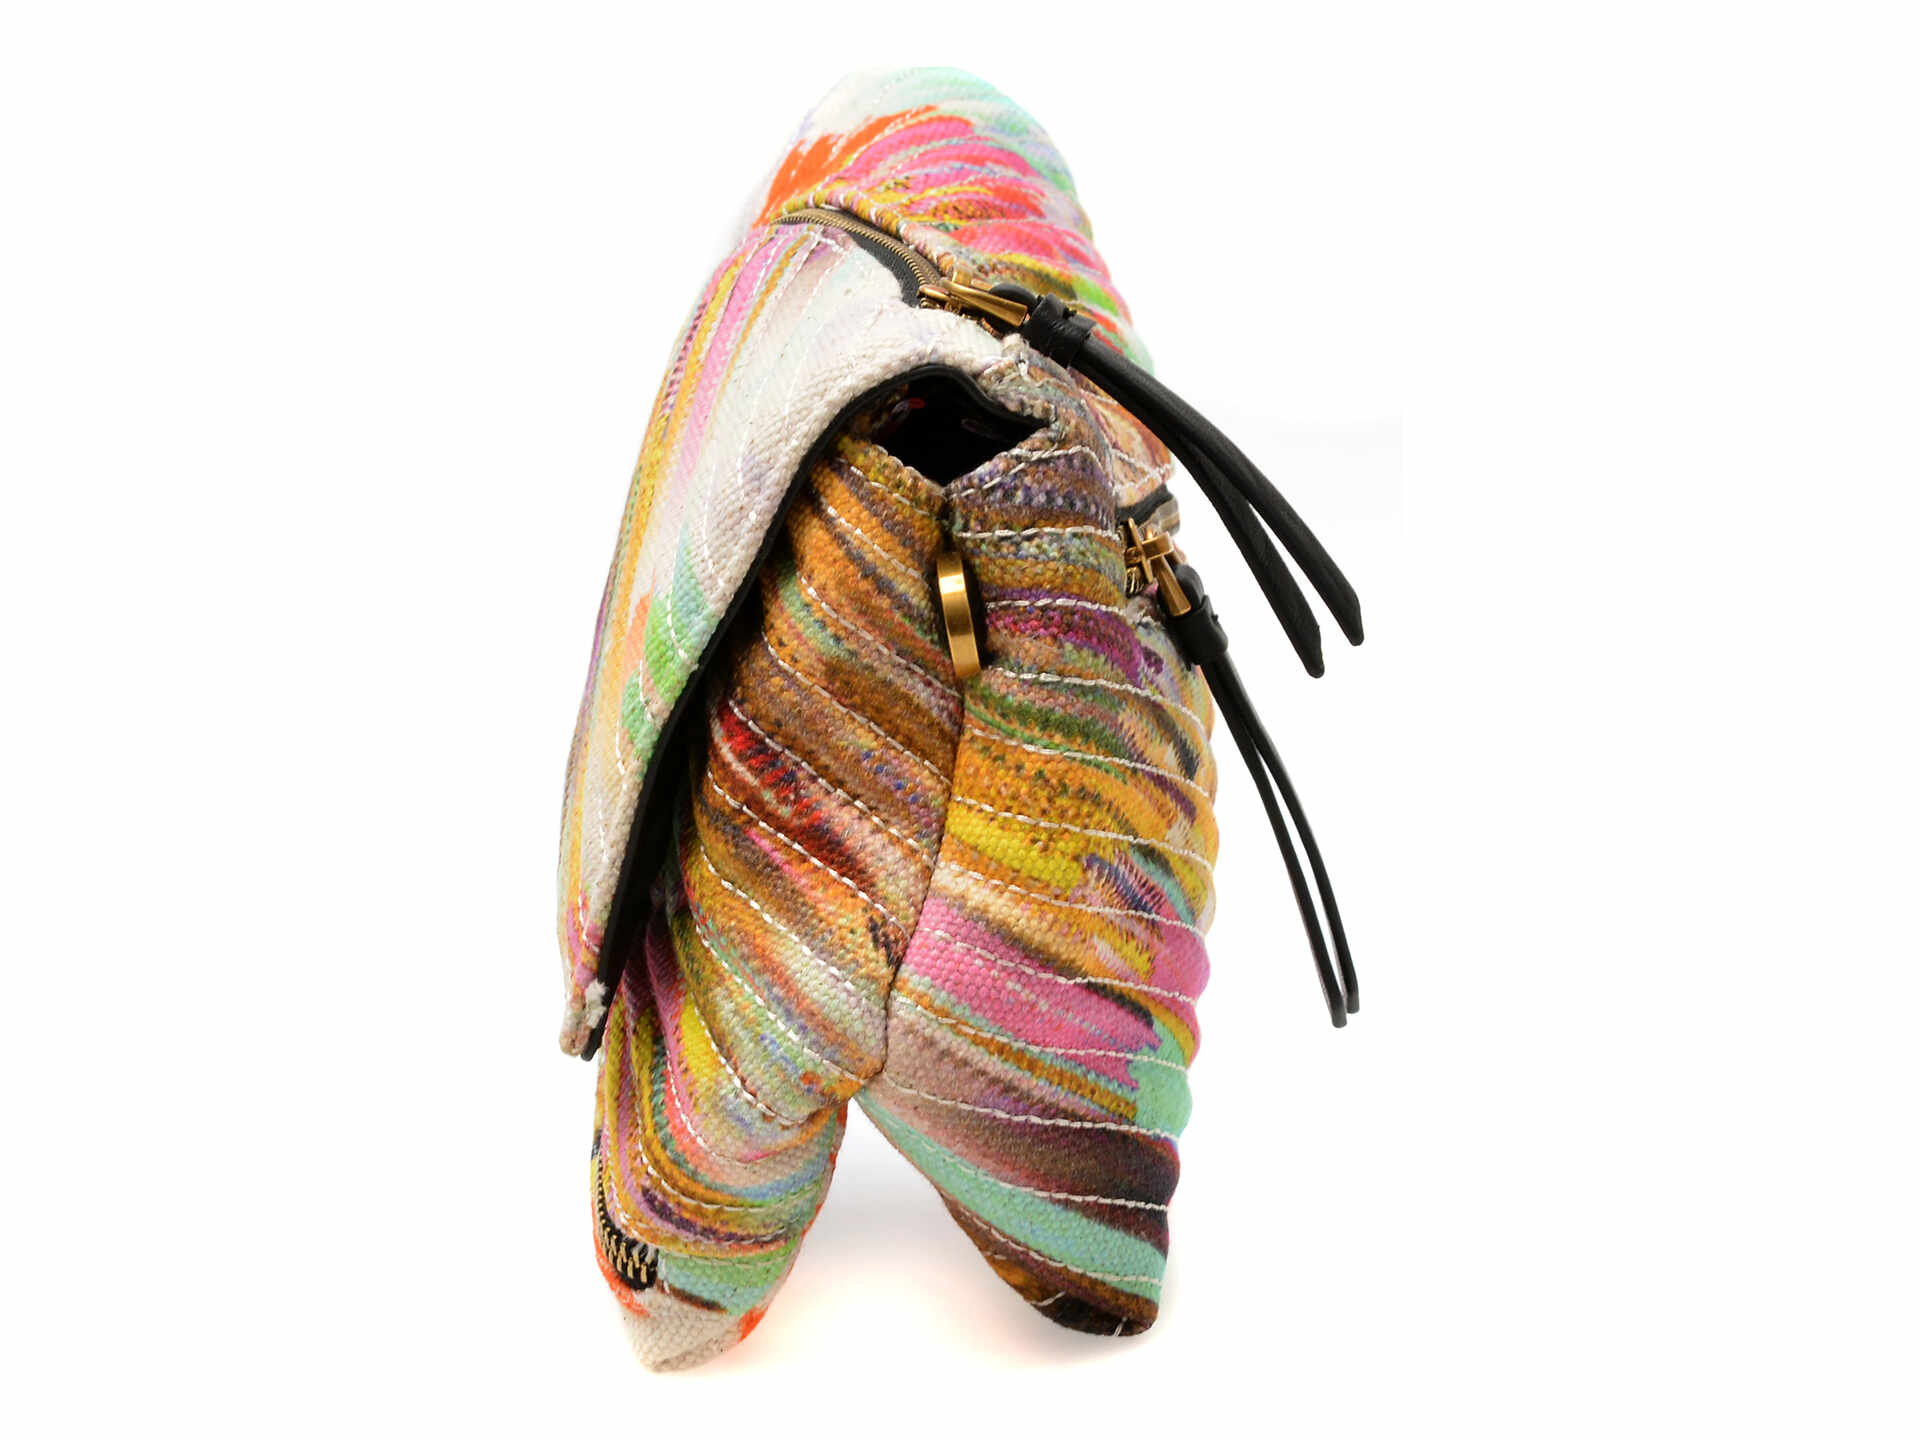 Poseta DESIGUAL multicolor, SAXA04, din material textil